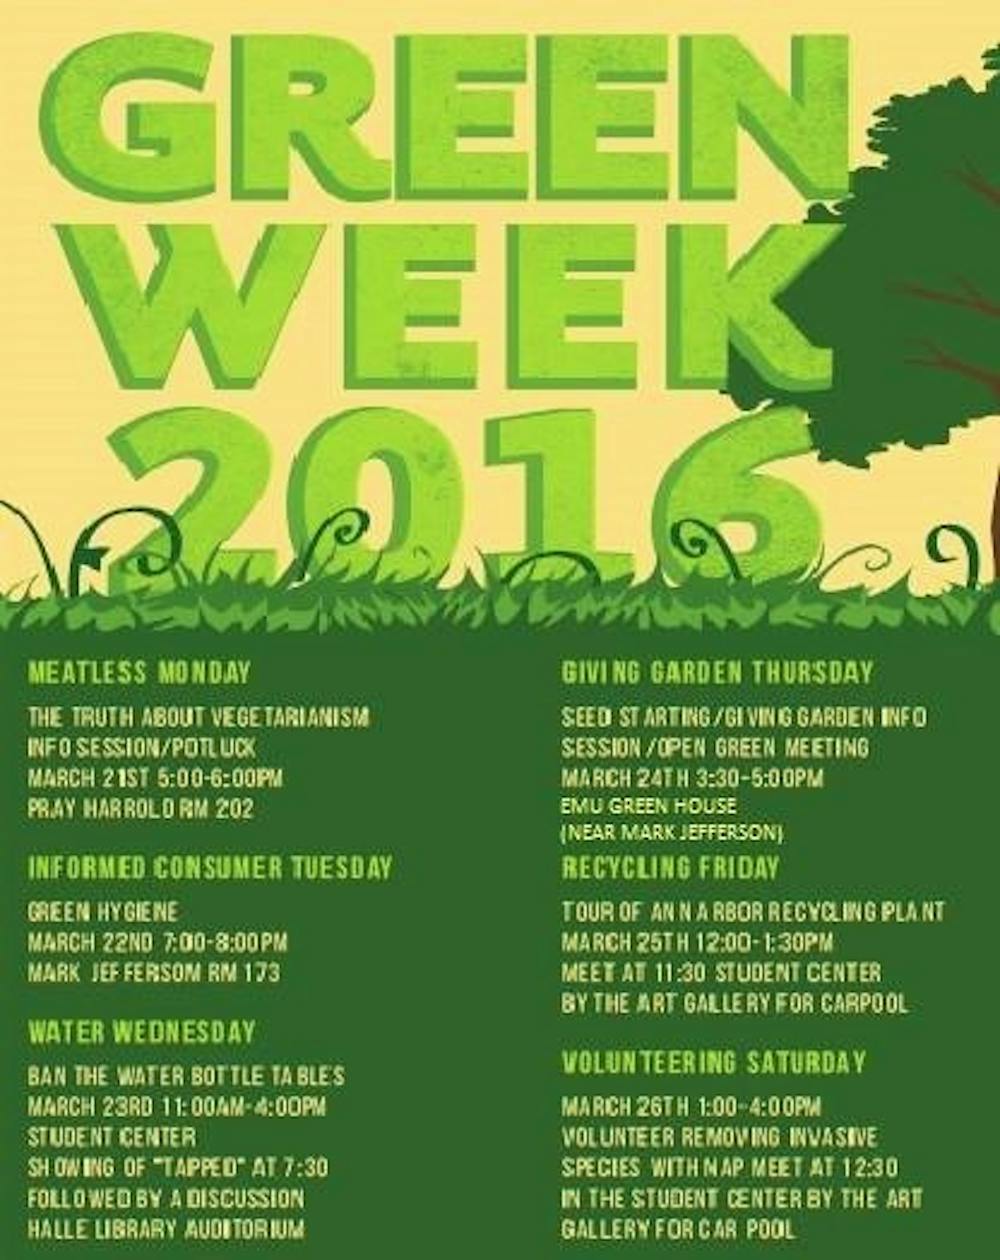 GREEN Club hosts GREEN Week 